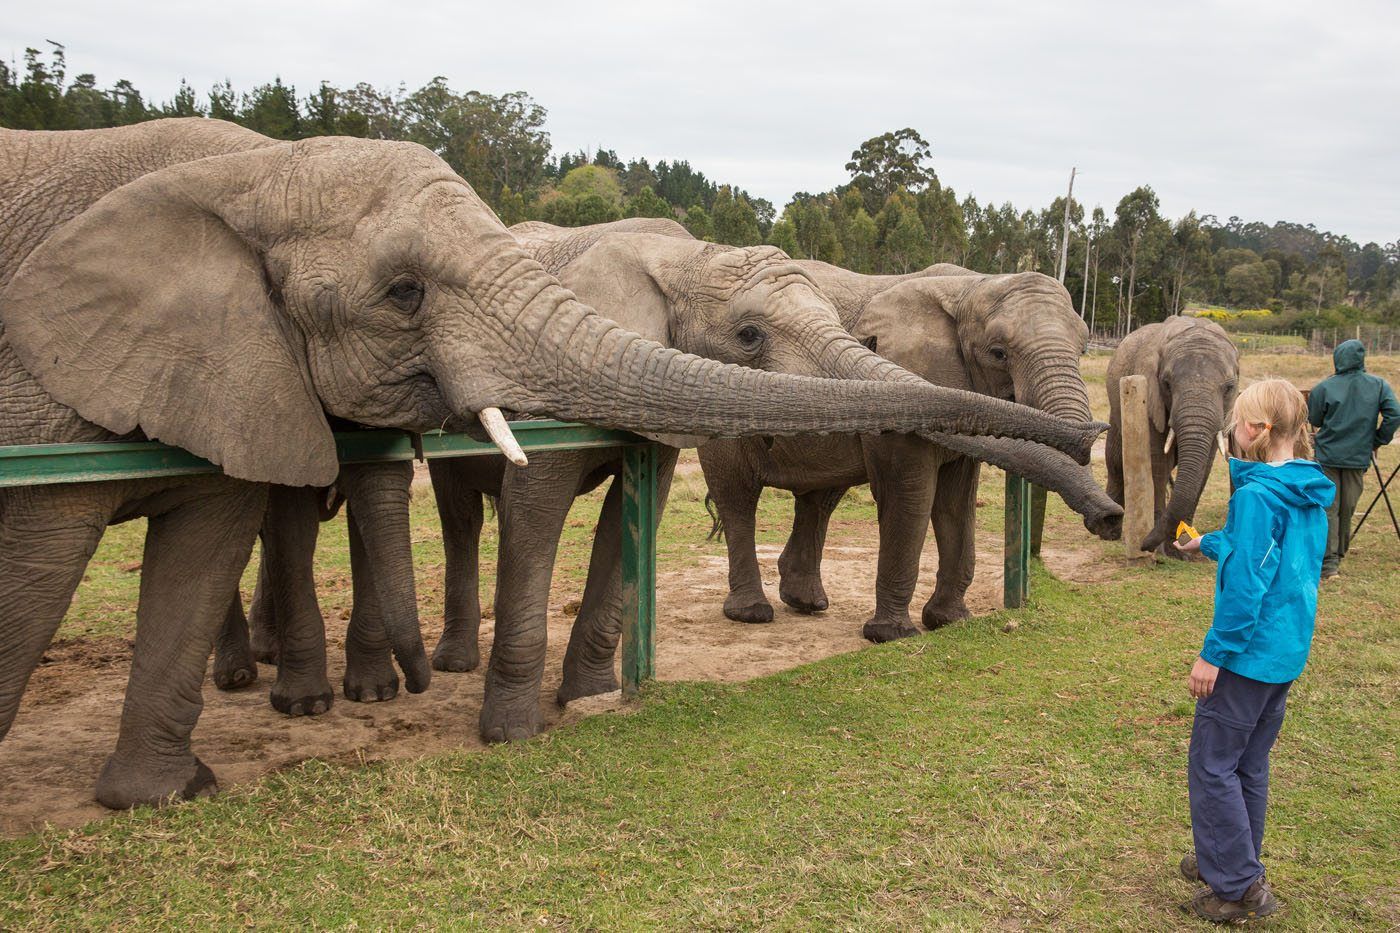 Feeding Elephants South Africa